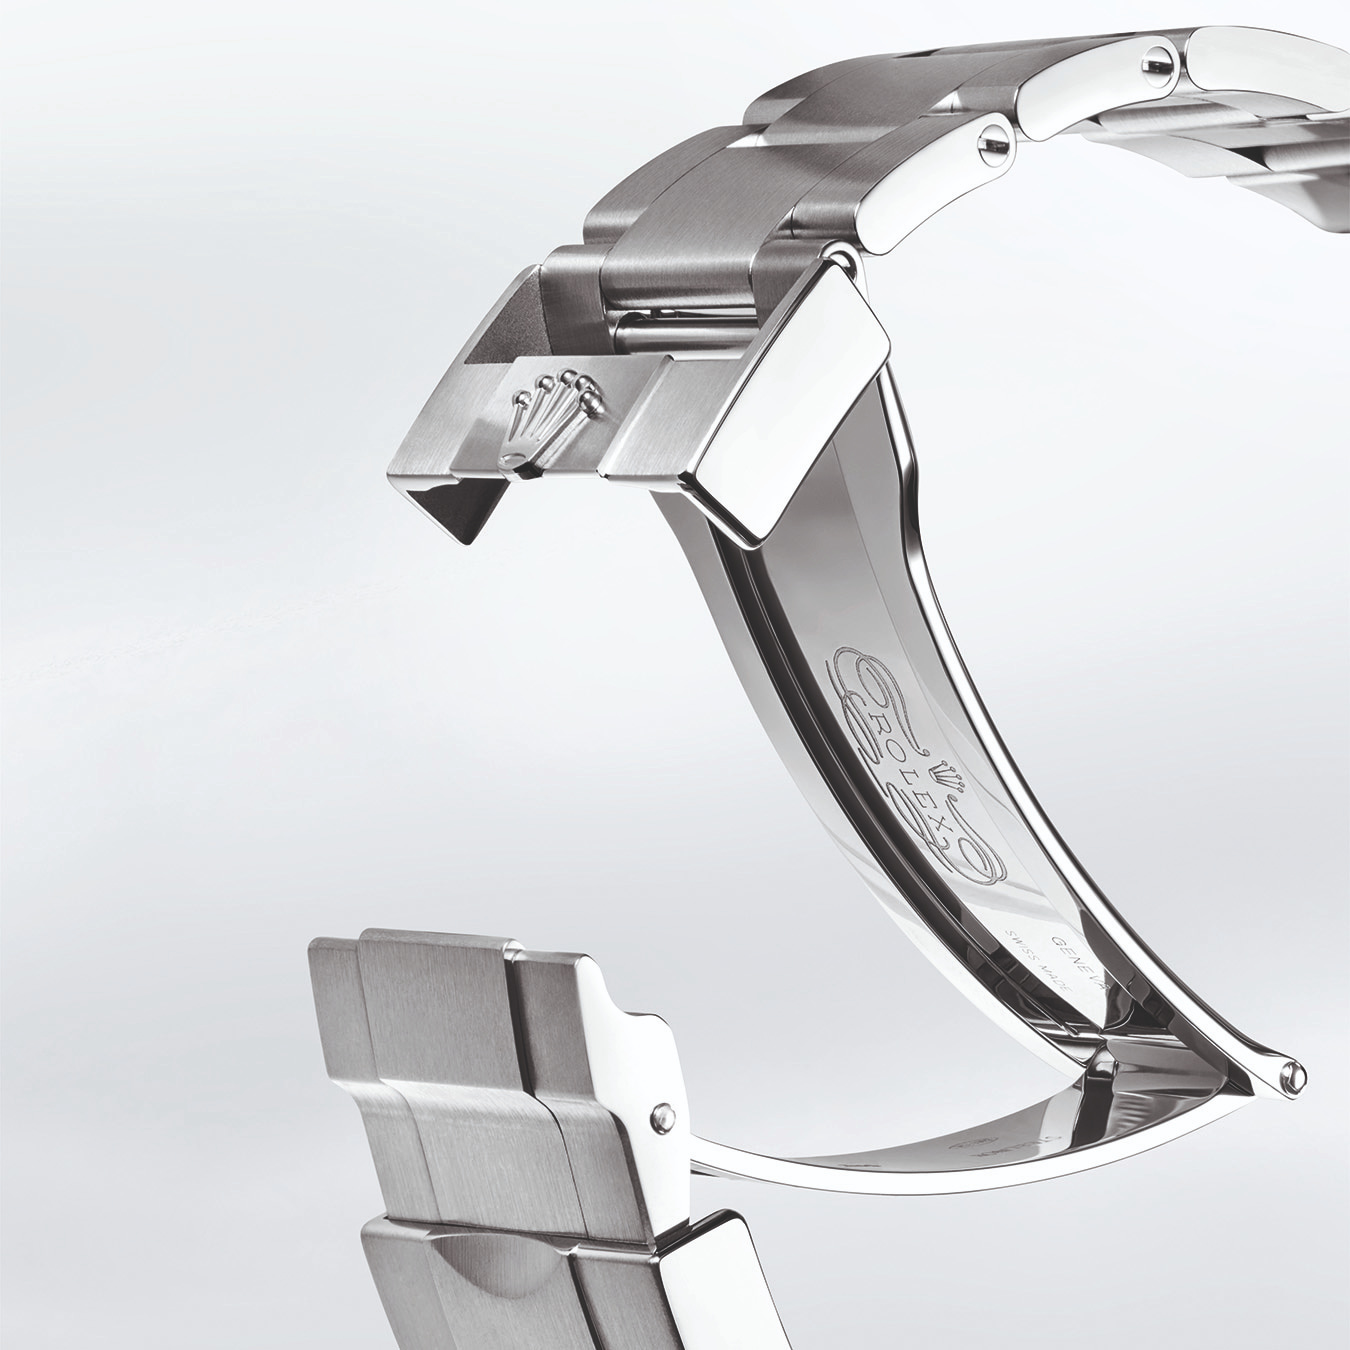 Rolex silver watch clasp with Rolex logo detail